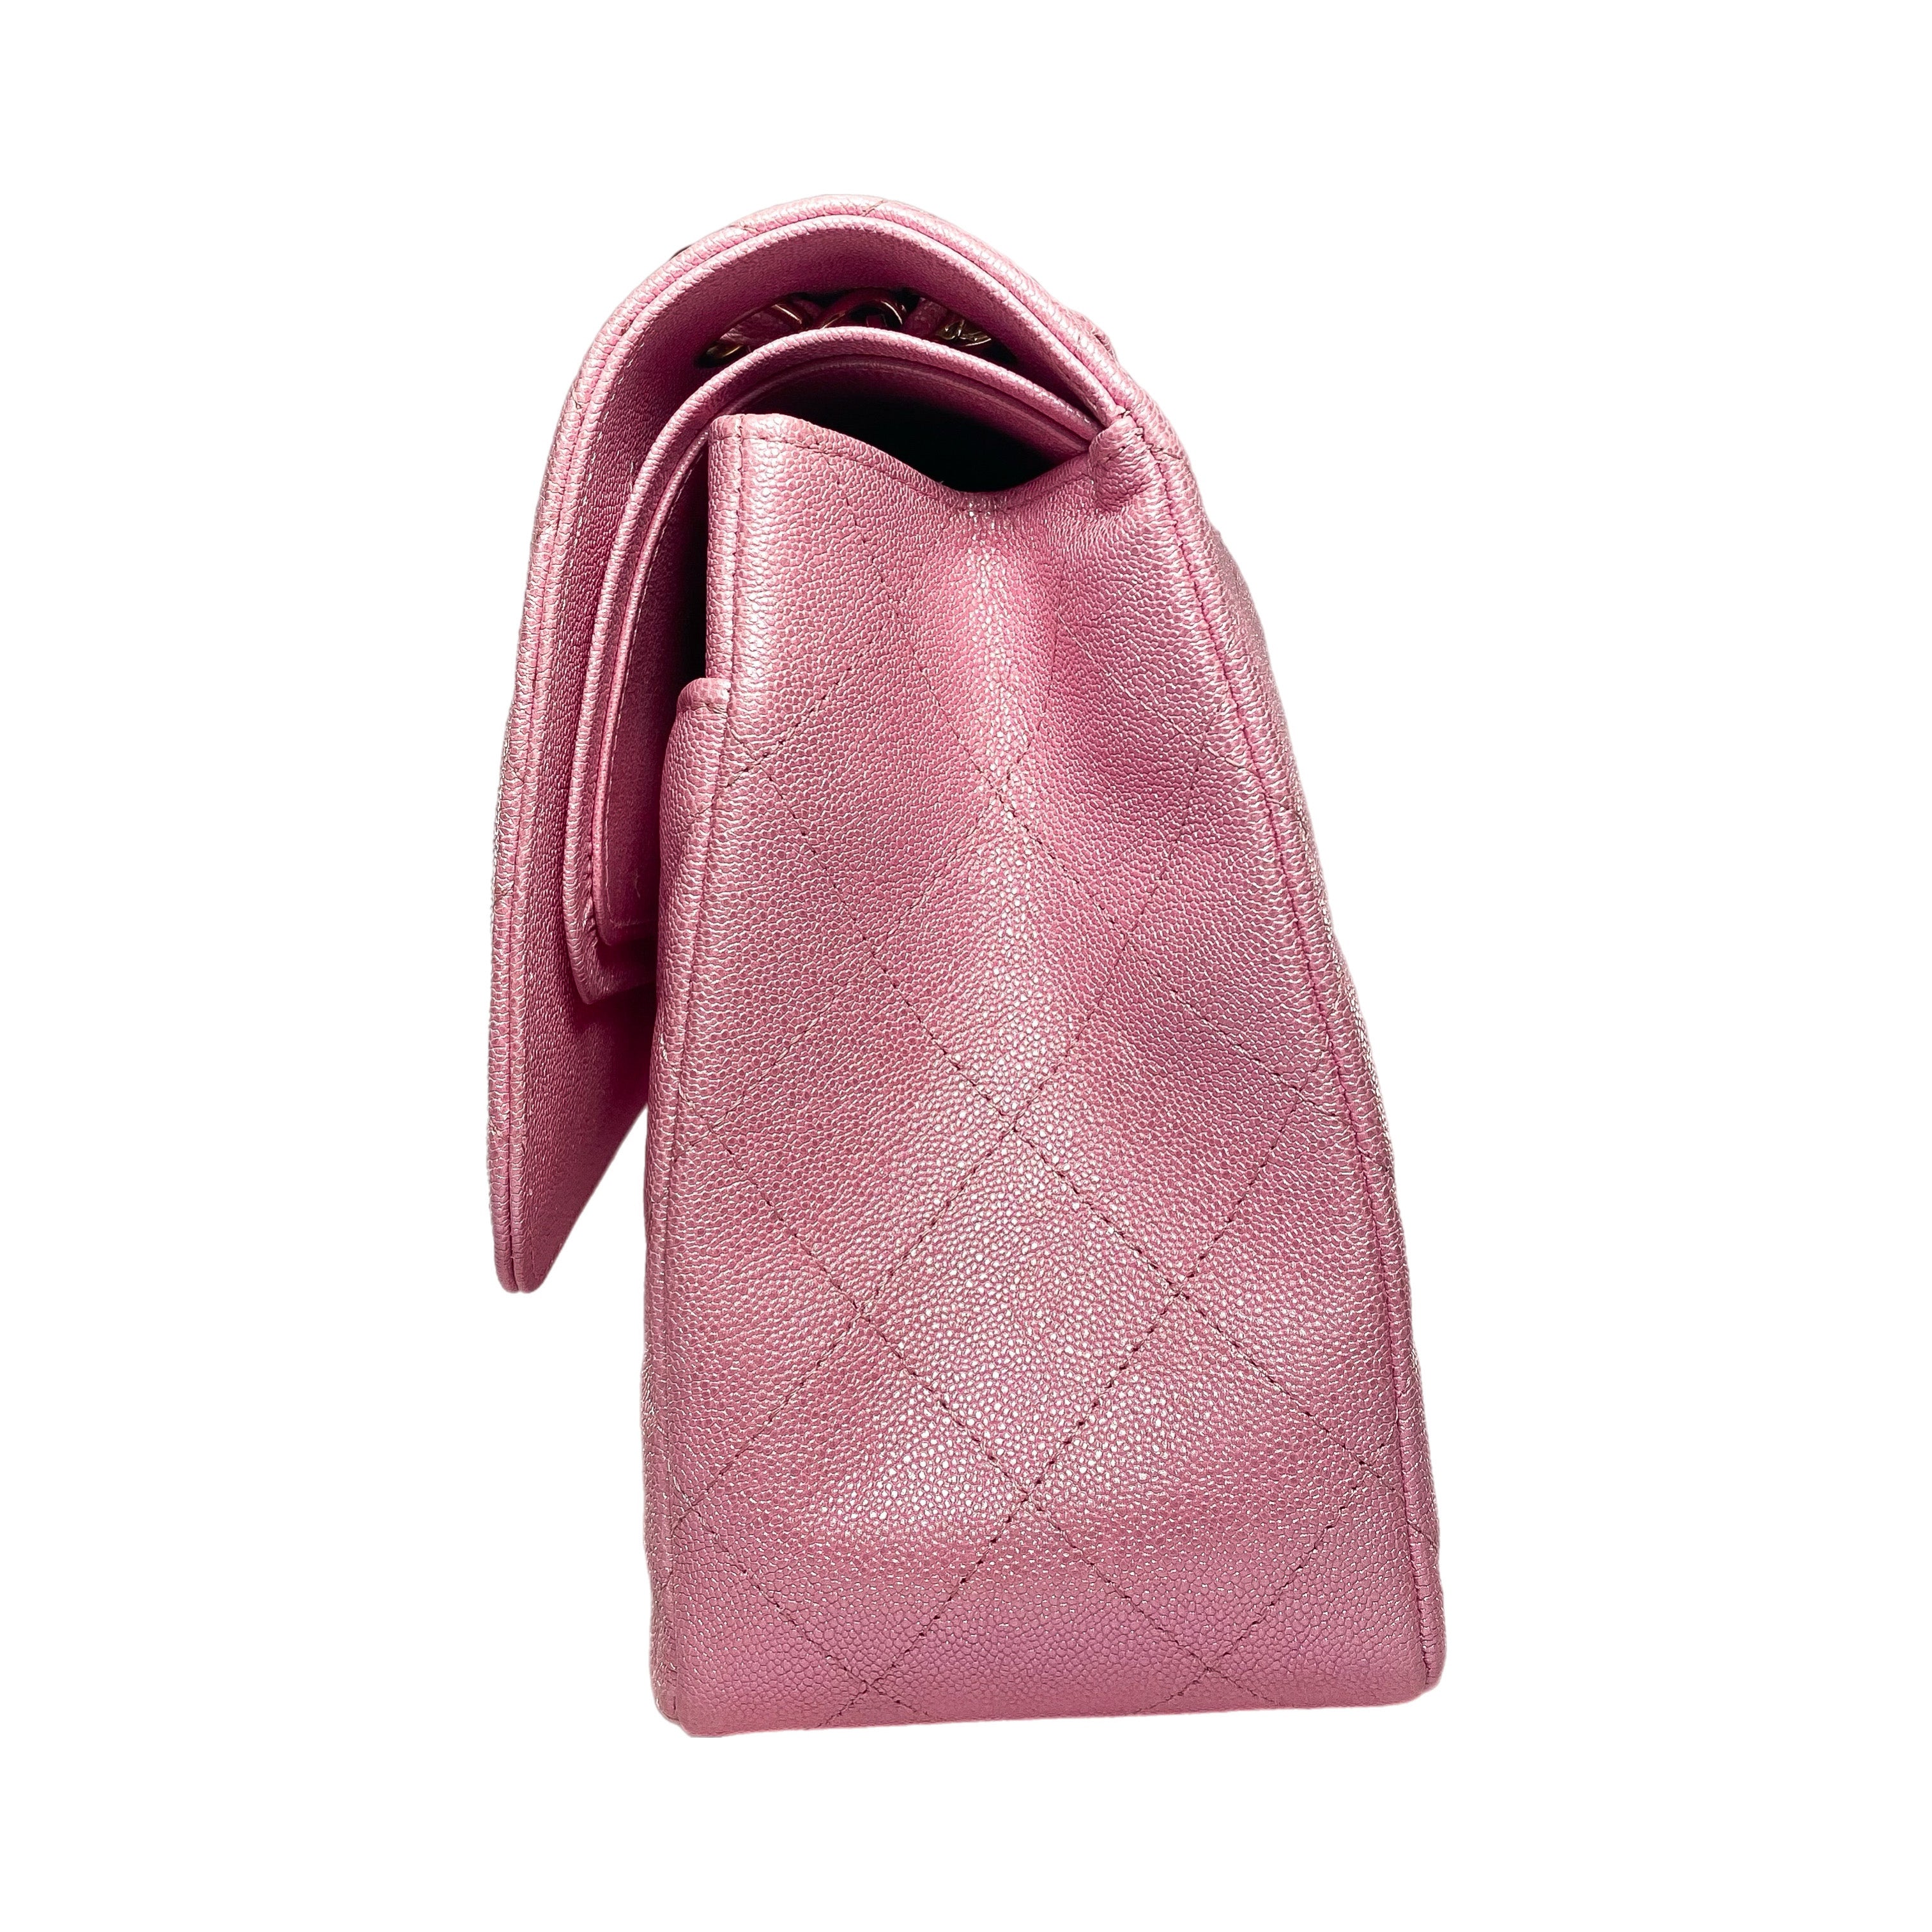 Chanel Iridescent Rose Pink Jumbo Double Flap Bag